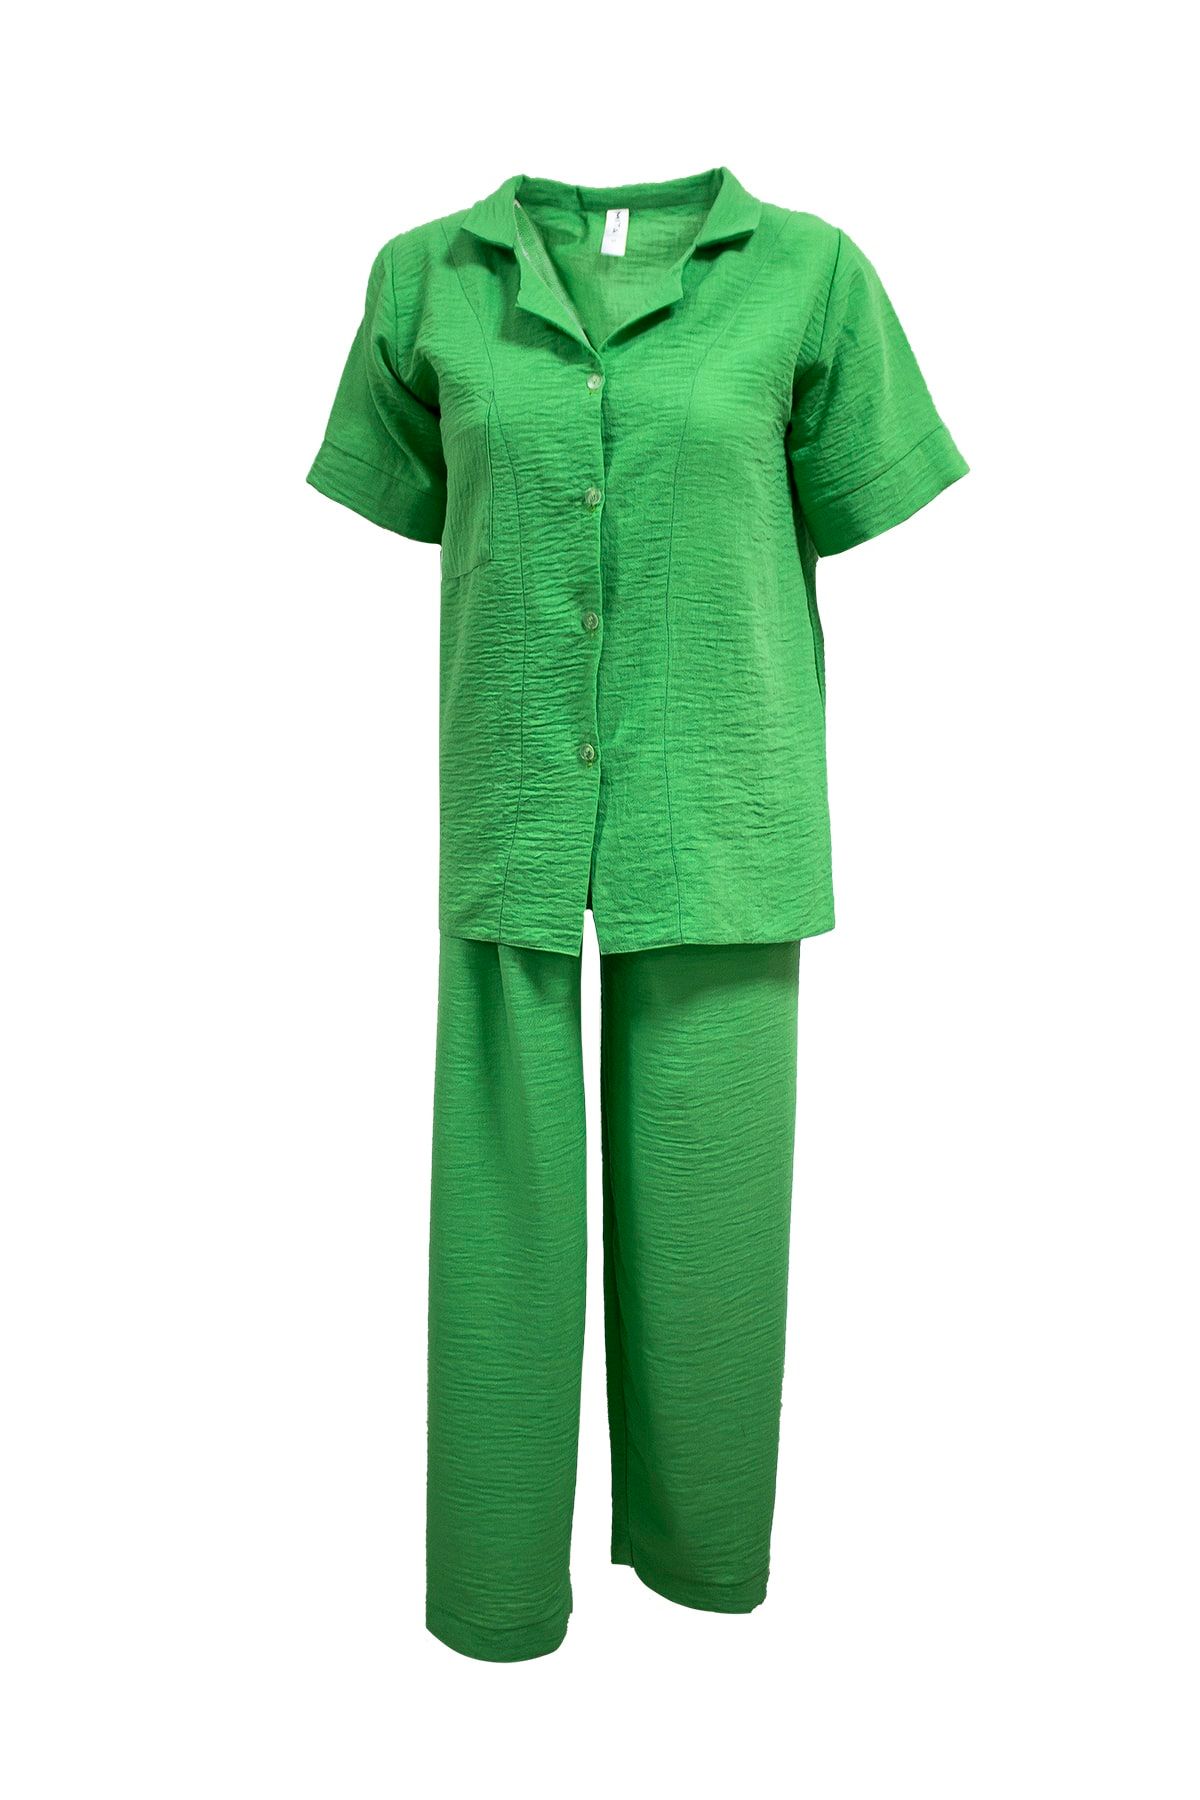 Mita Concept Ham Keten Yeşil Gömlekli Pijama Takımı